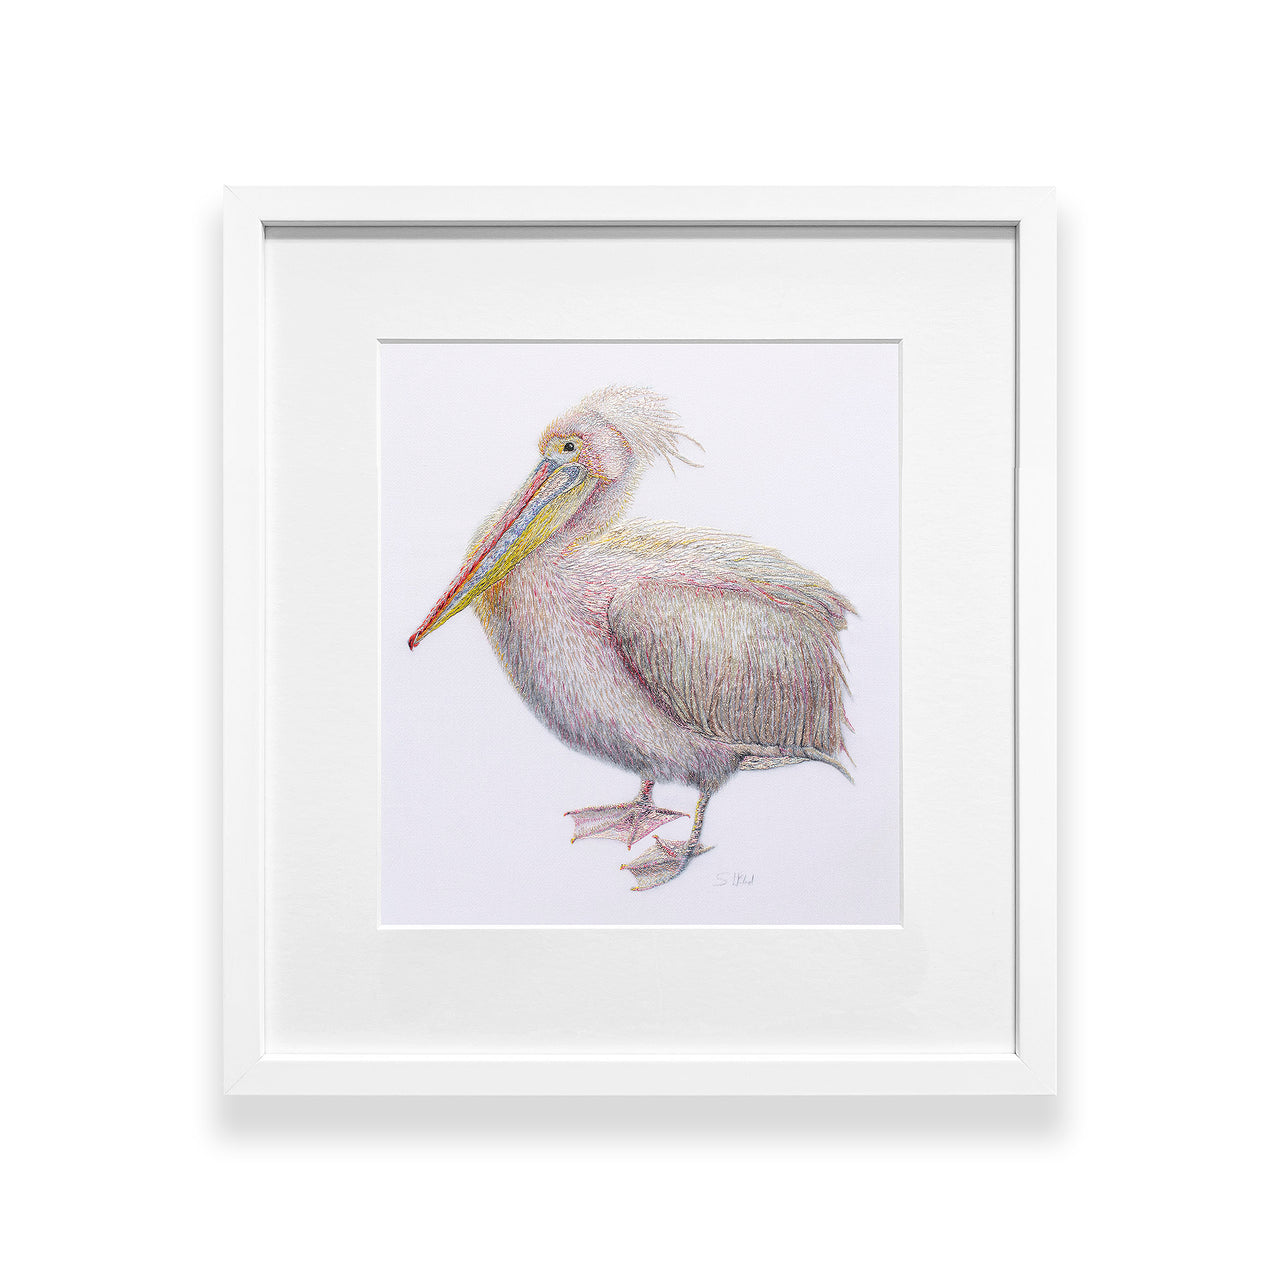 Original hand embroidered pelican artwork in white frame